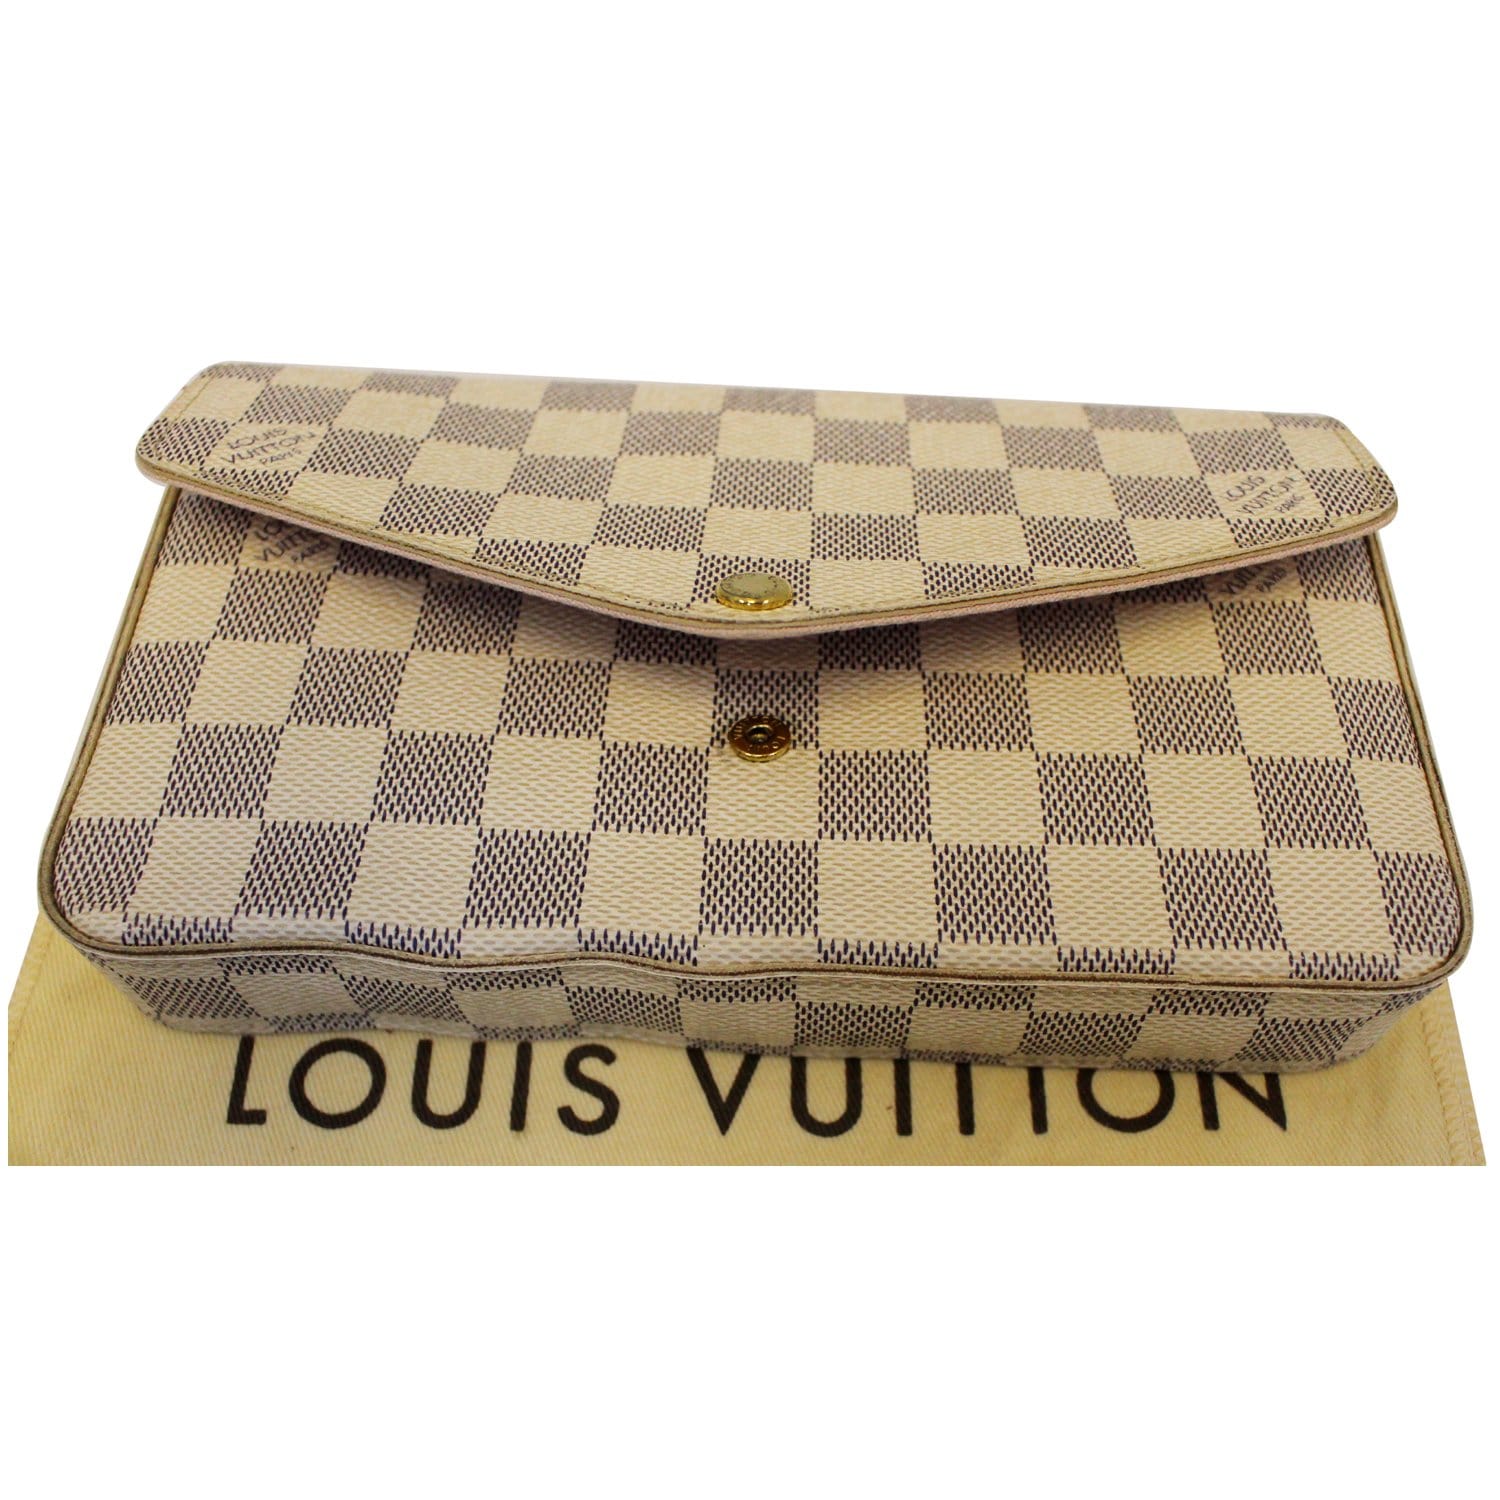 Shop Louis Vuitton DAMIER AZUR Félicie pochette (N63106) by Bellaris